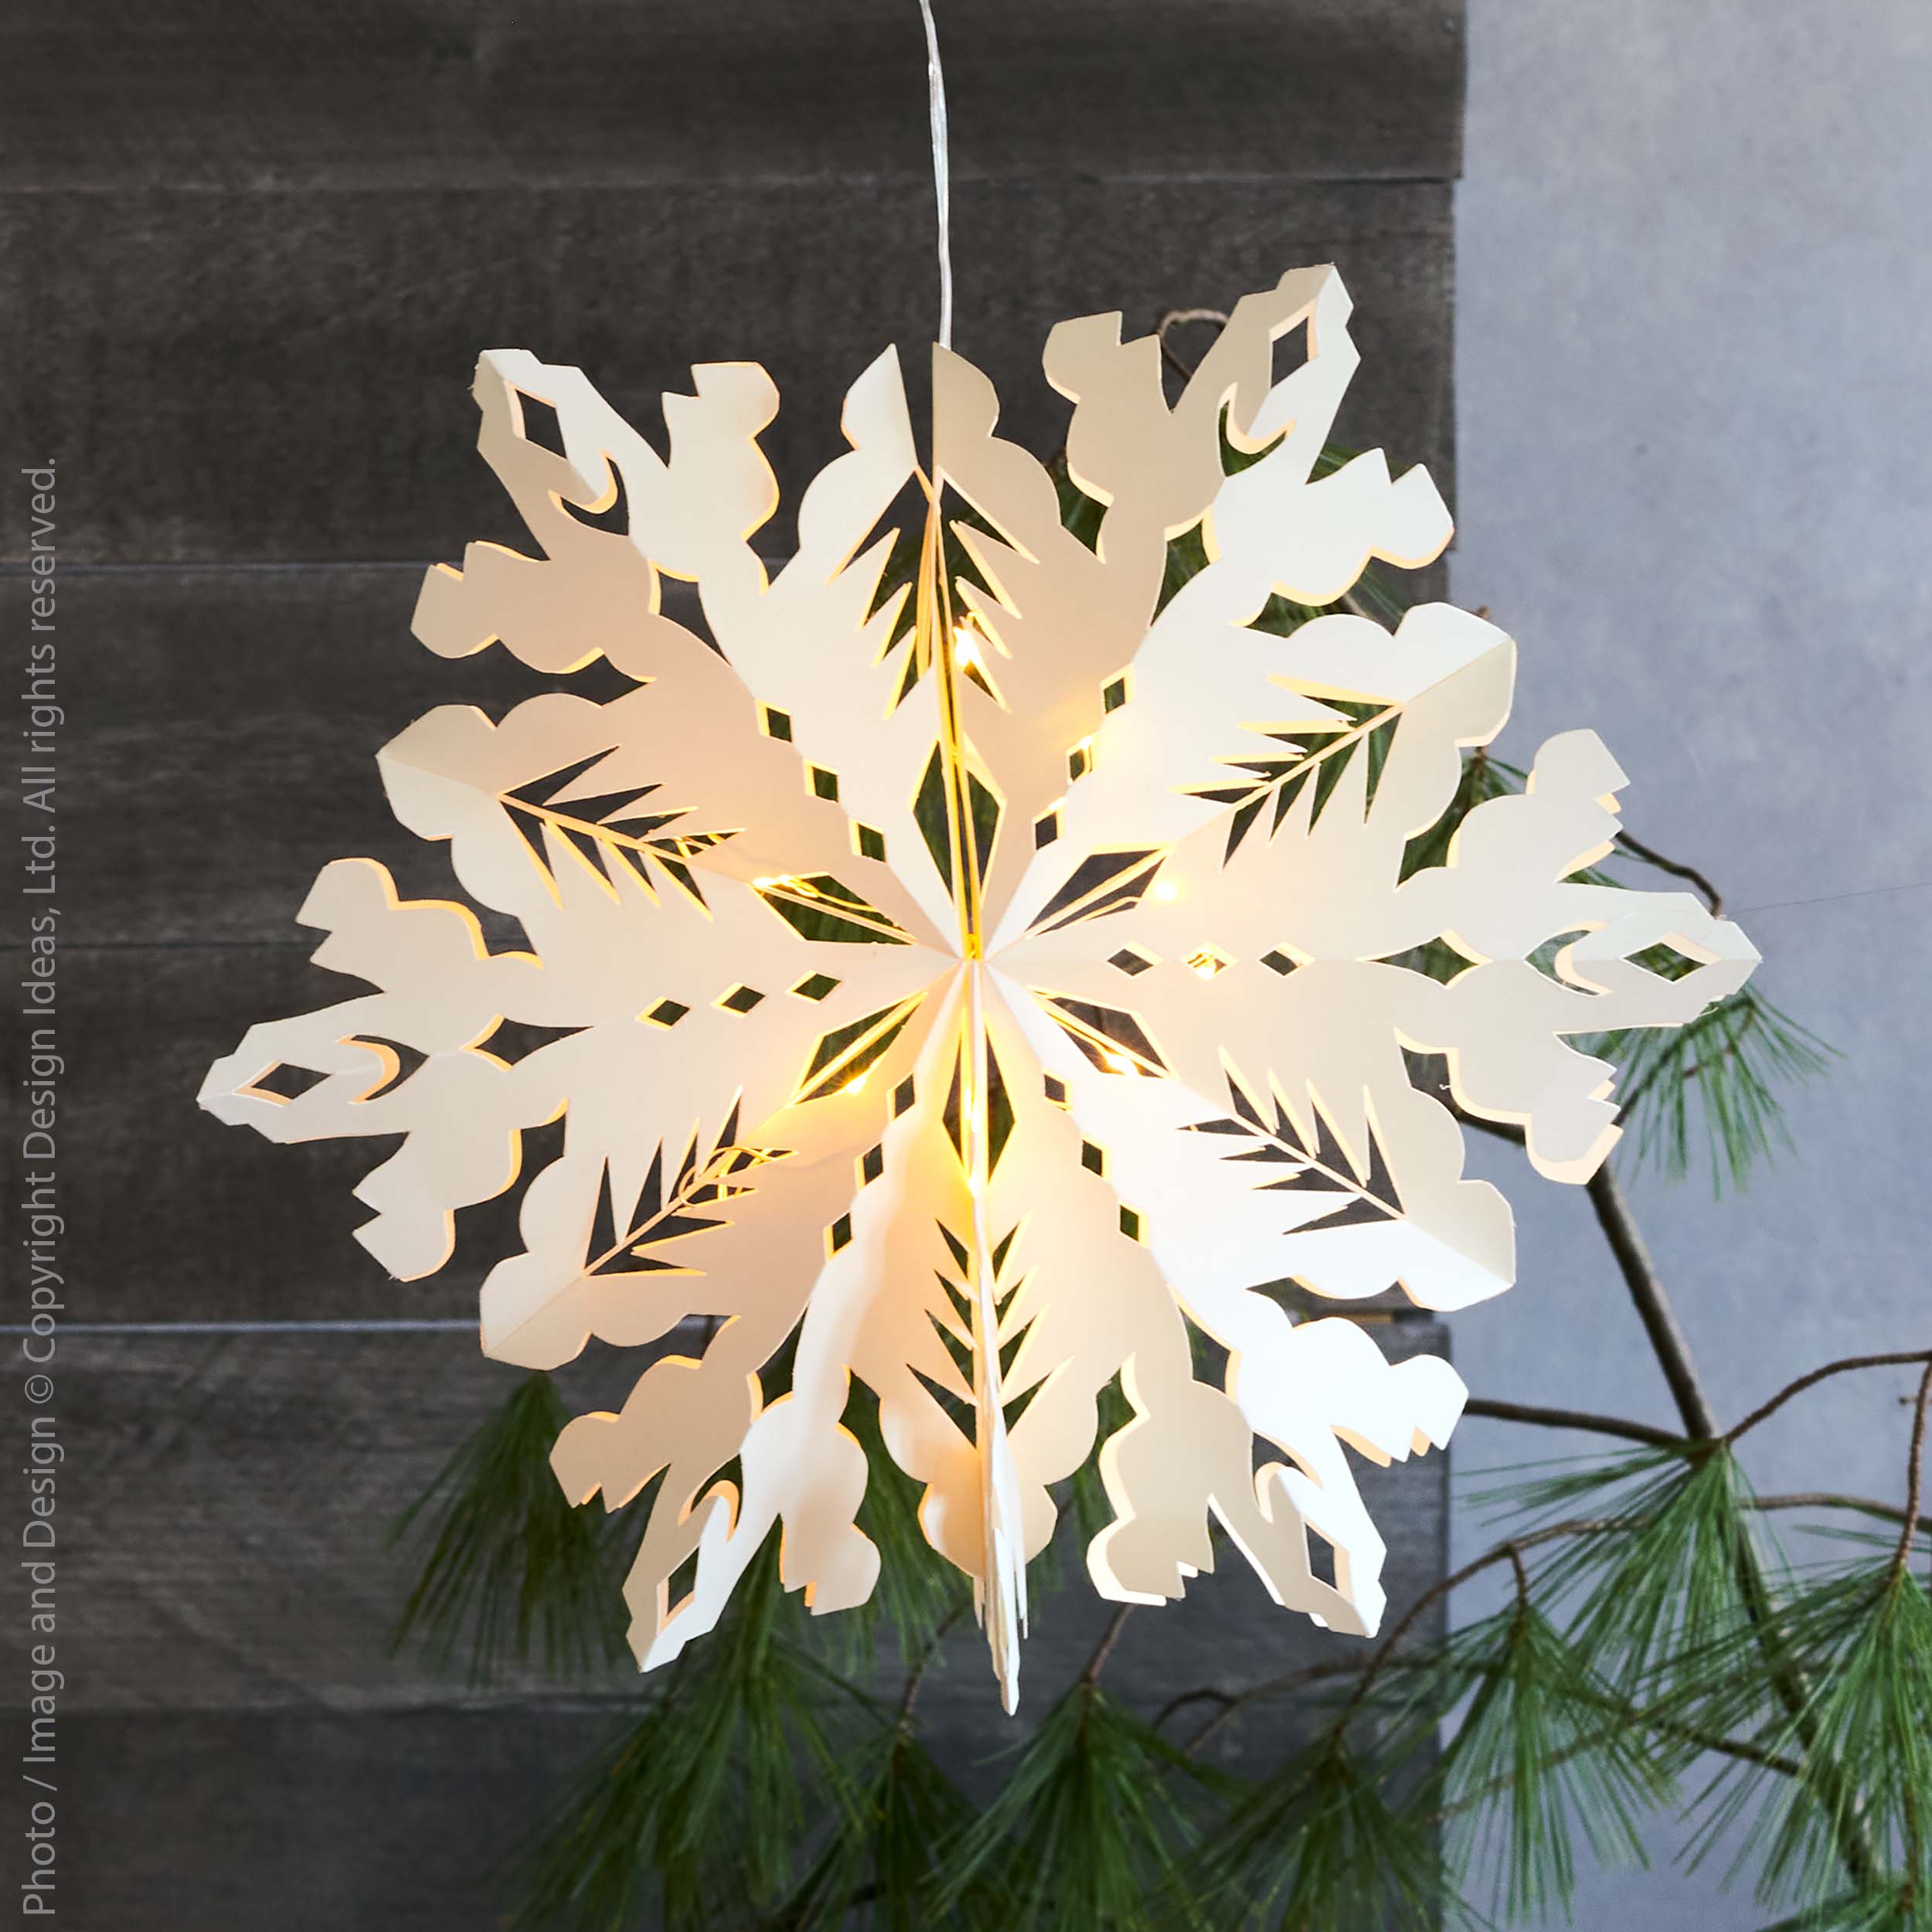 Flurry™ Petunia LED Paper Snowflake